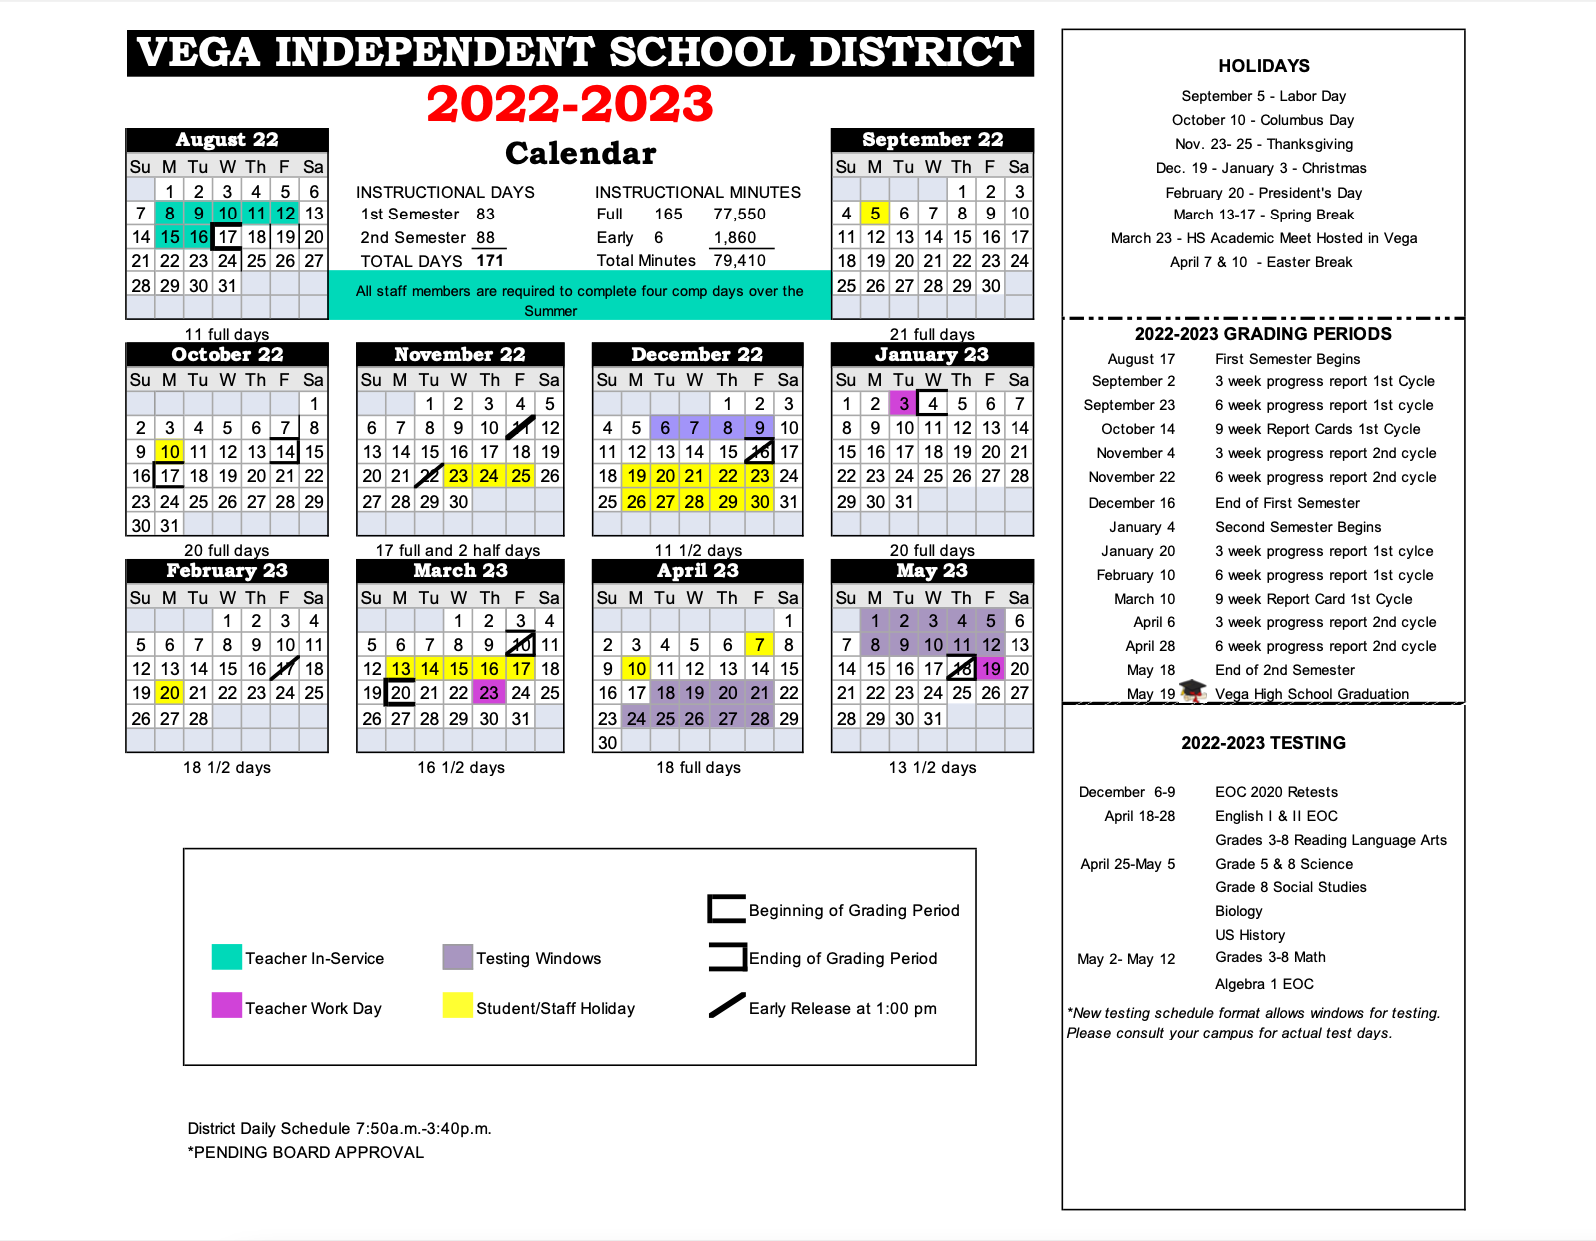 District Calendar Vega Independent School District